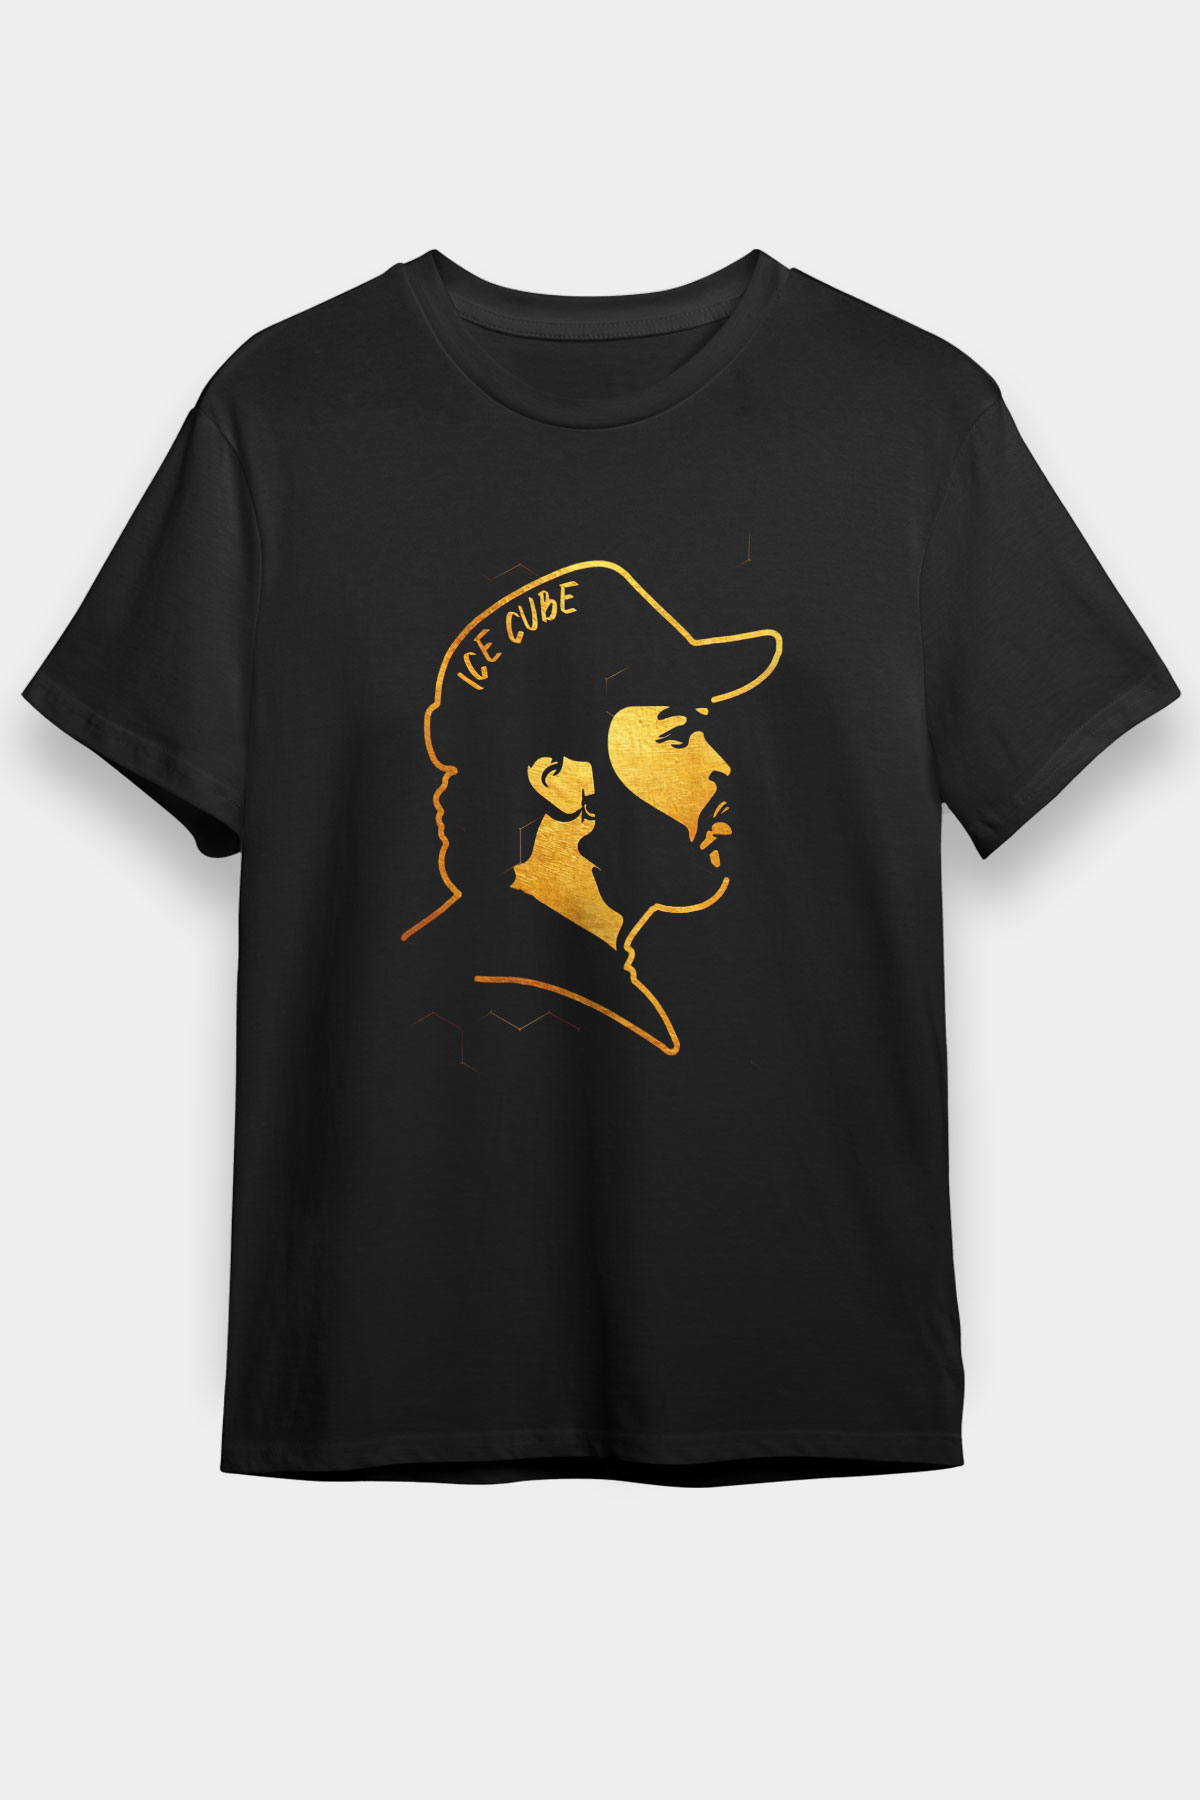 Ice Cube T shirt,Hip Hop,Rap Tshirt 15